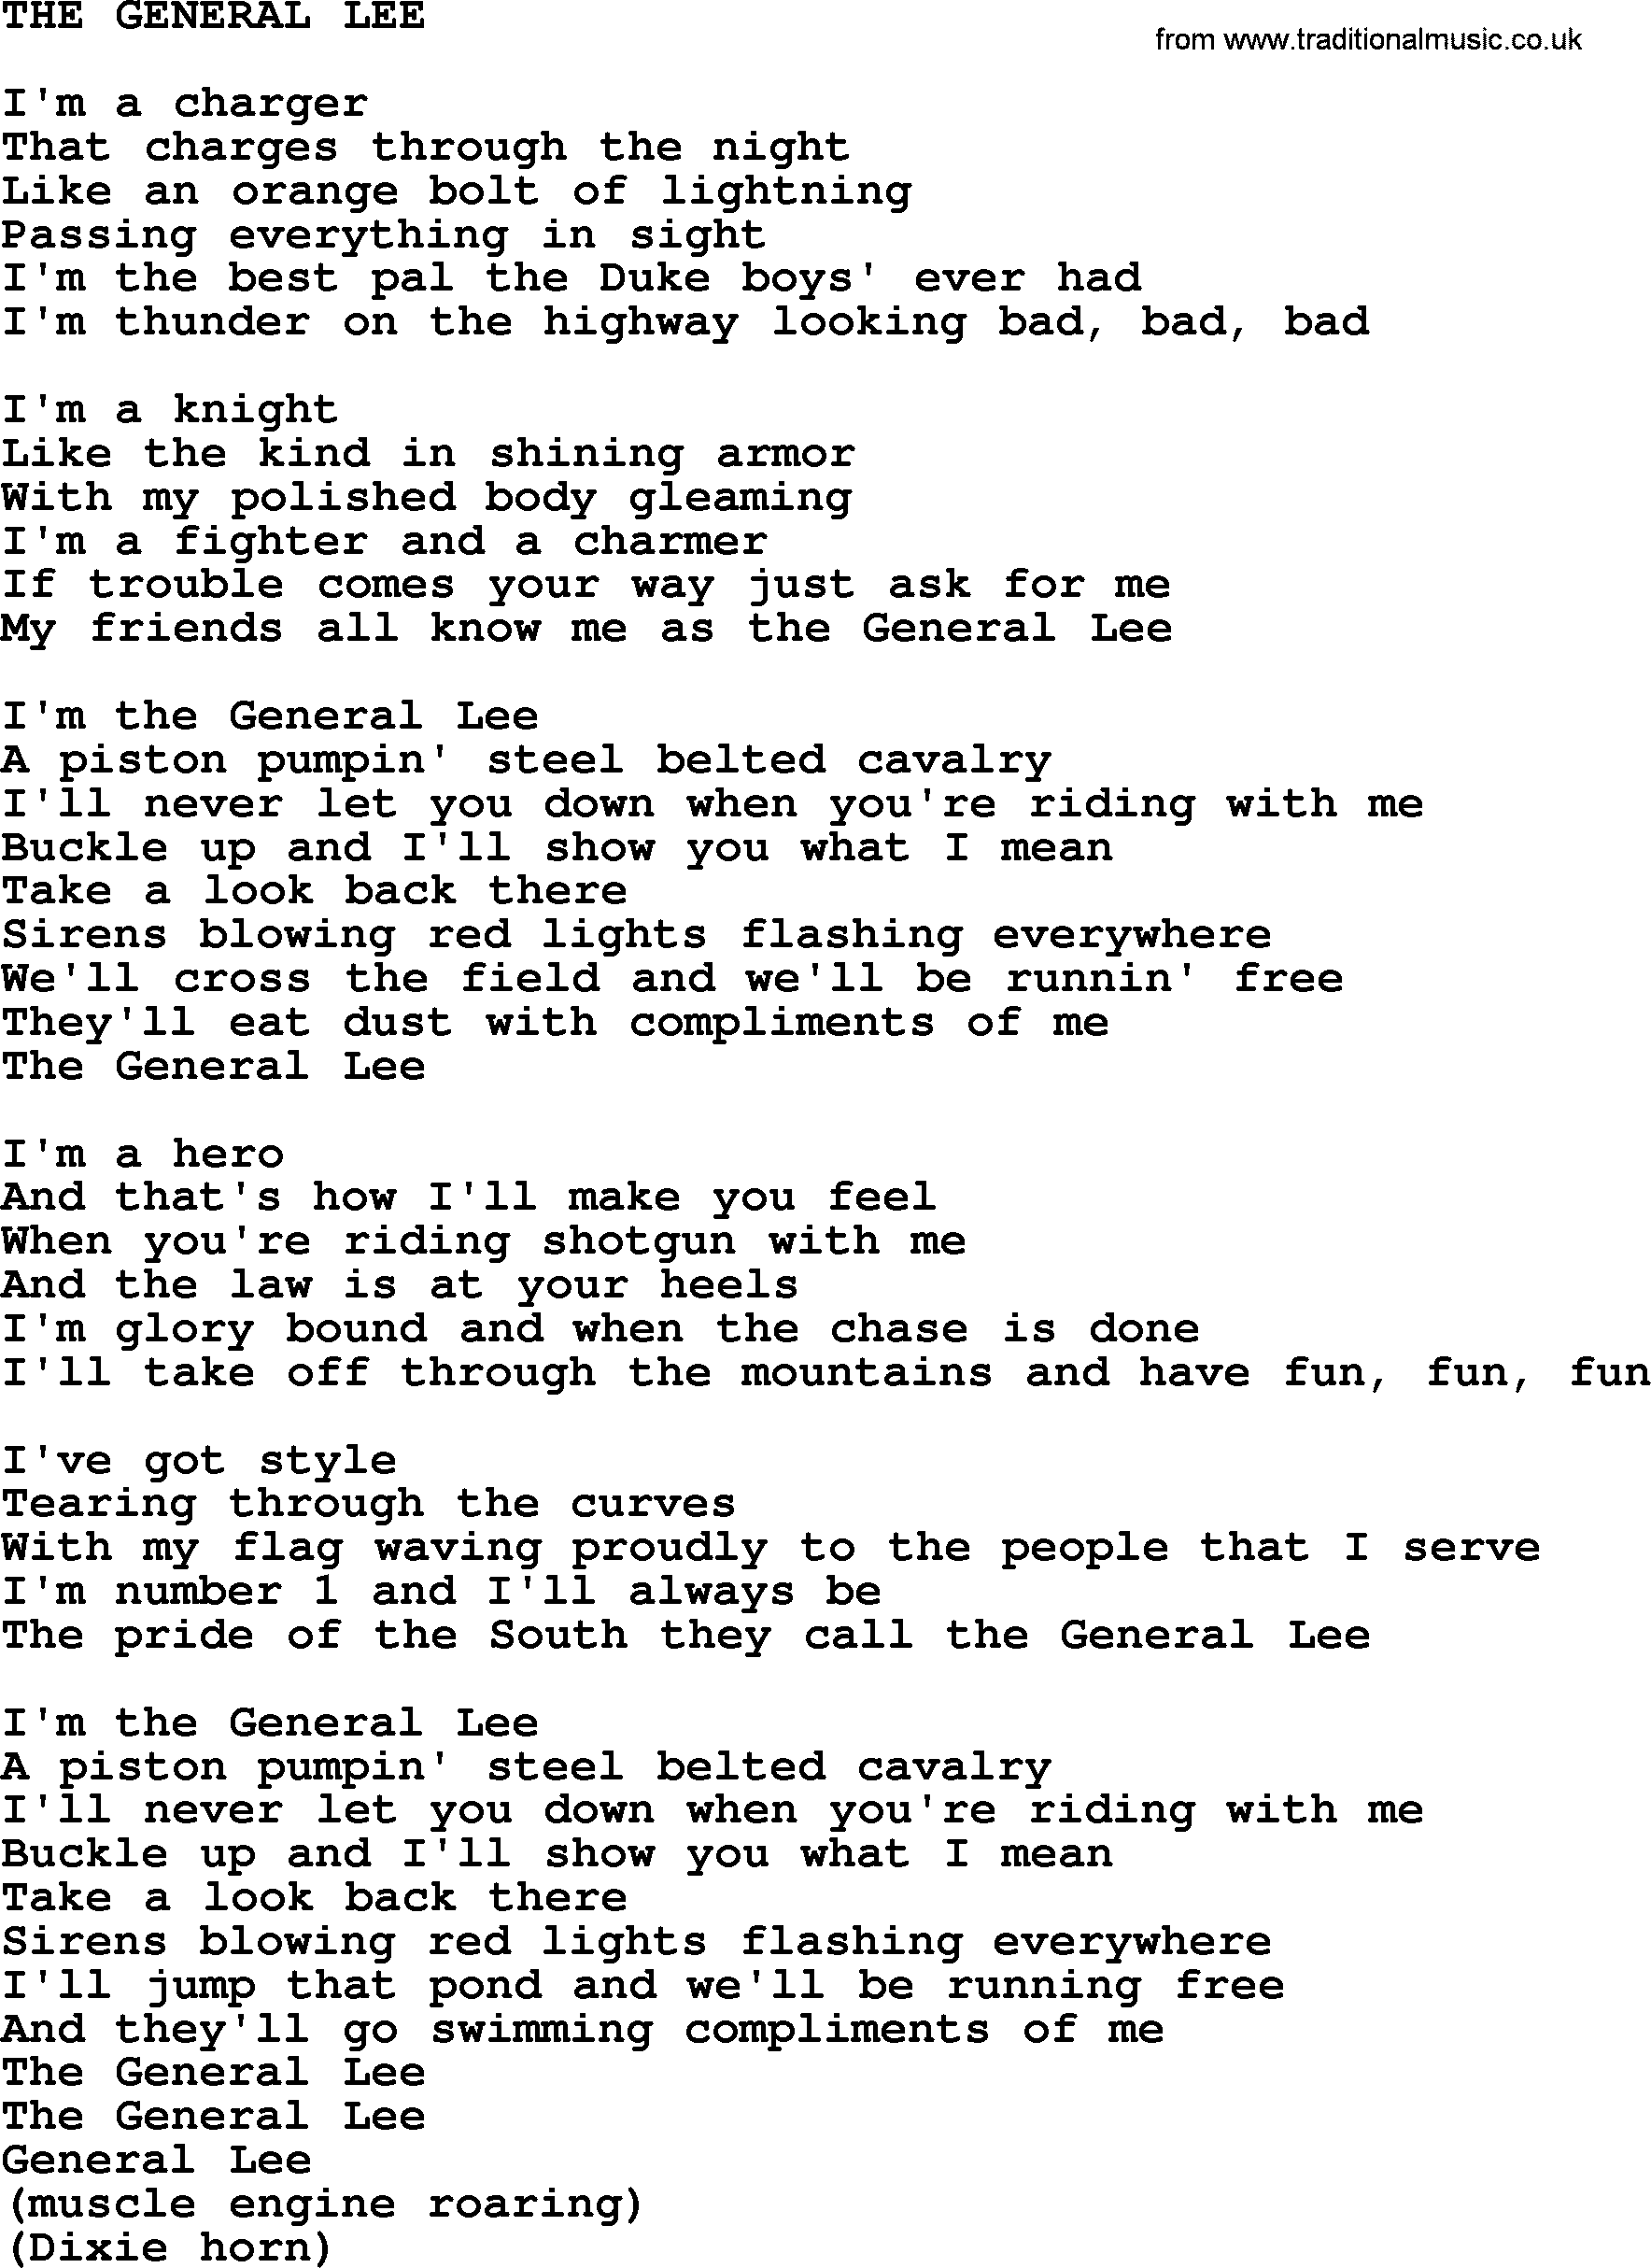 Johnny Cash song: The General Lee, lyrics